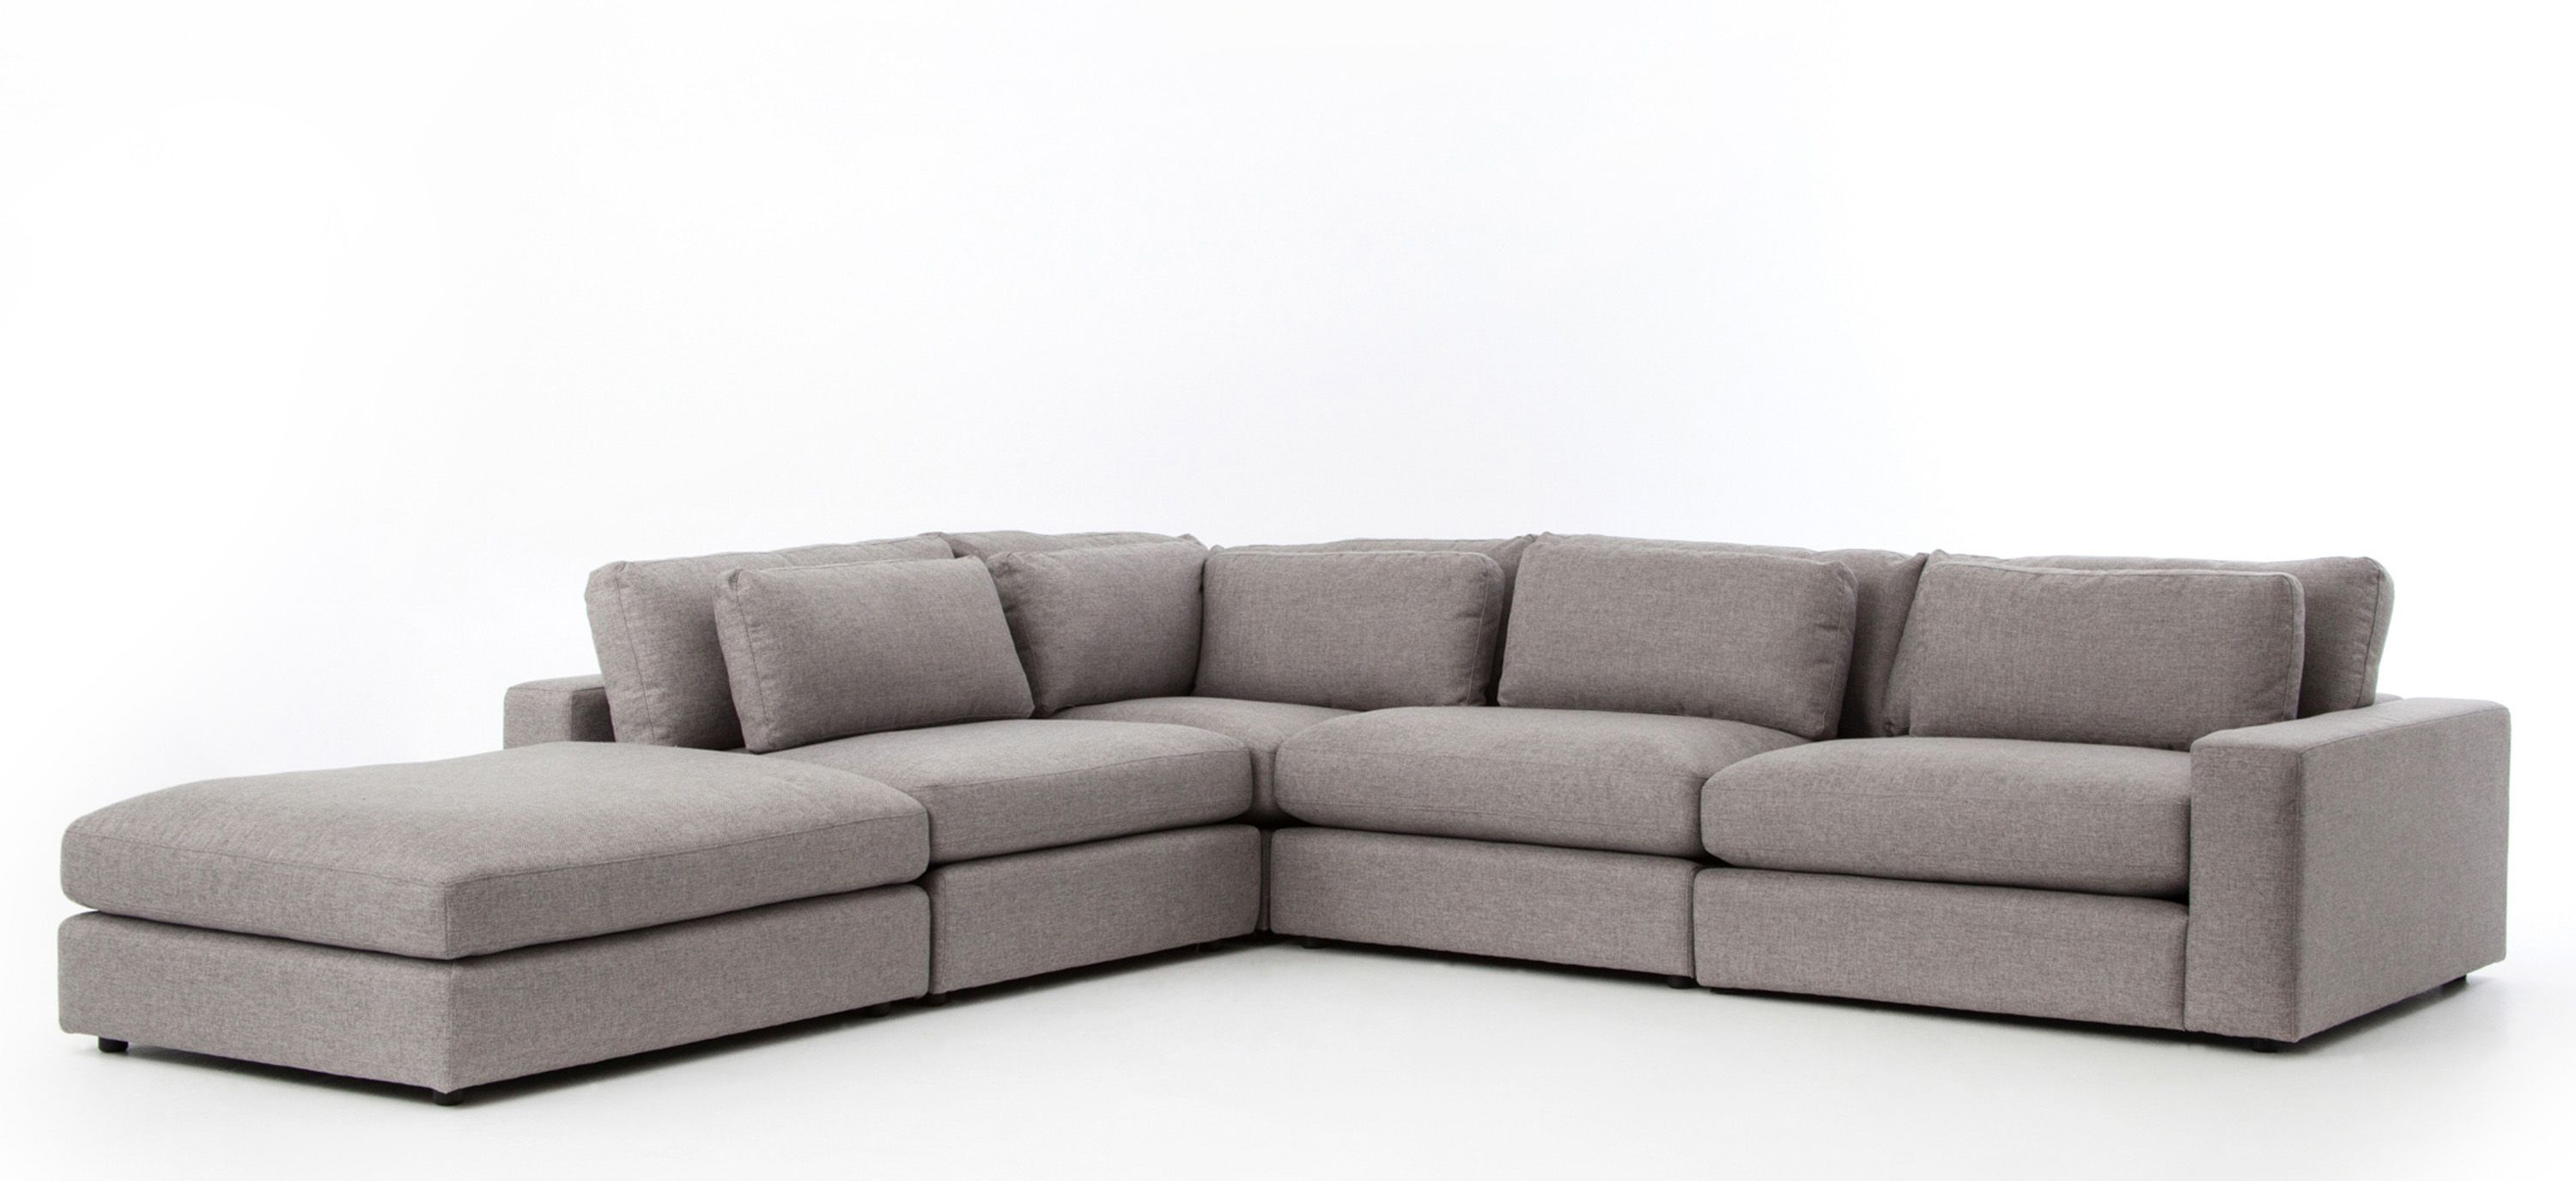 Bloor 5-pc. Modular Sectional Sofa